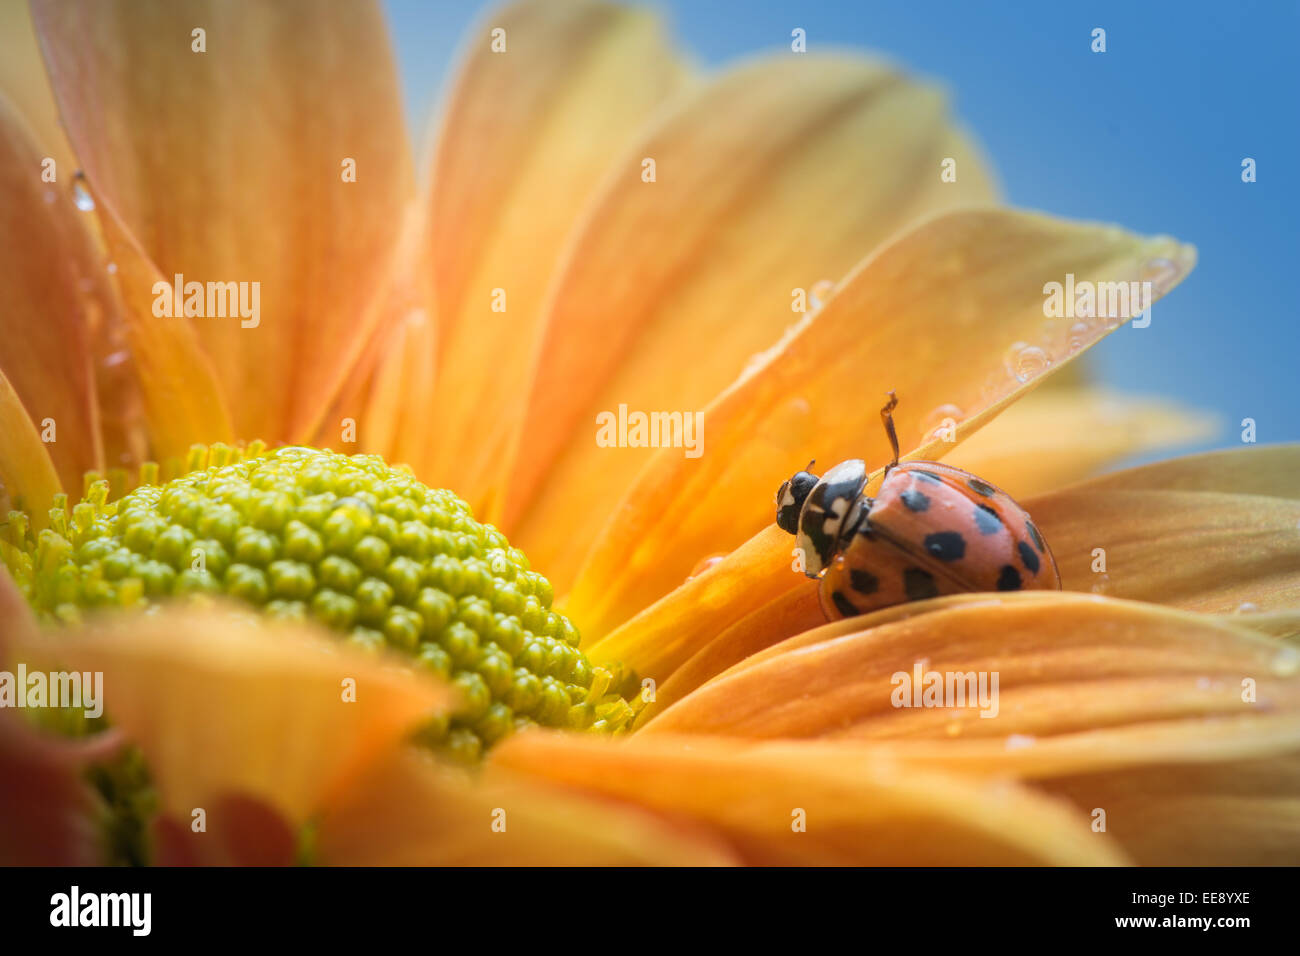 A single ladybug explores a yellow daisy. Stock Photo